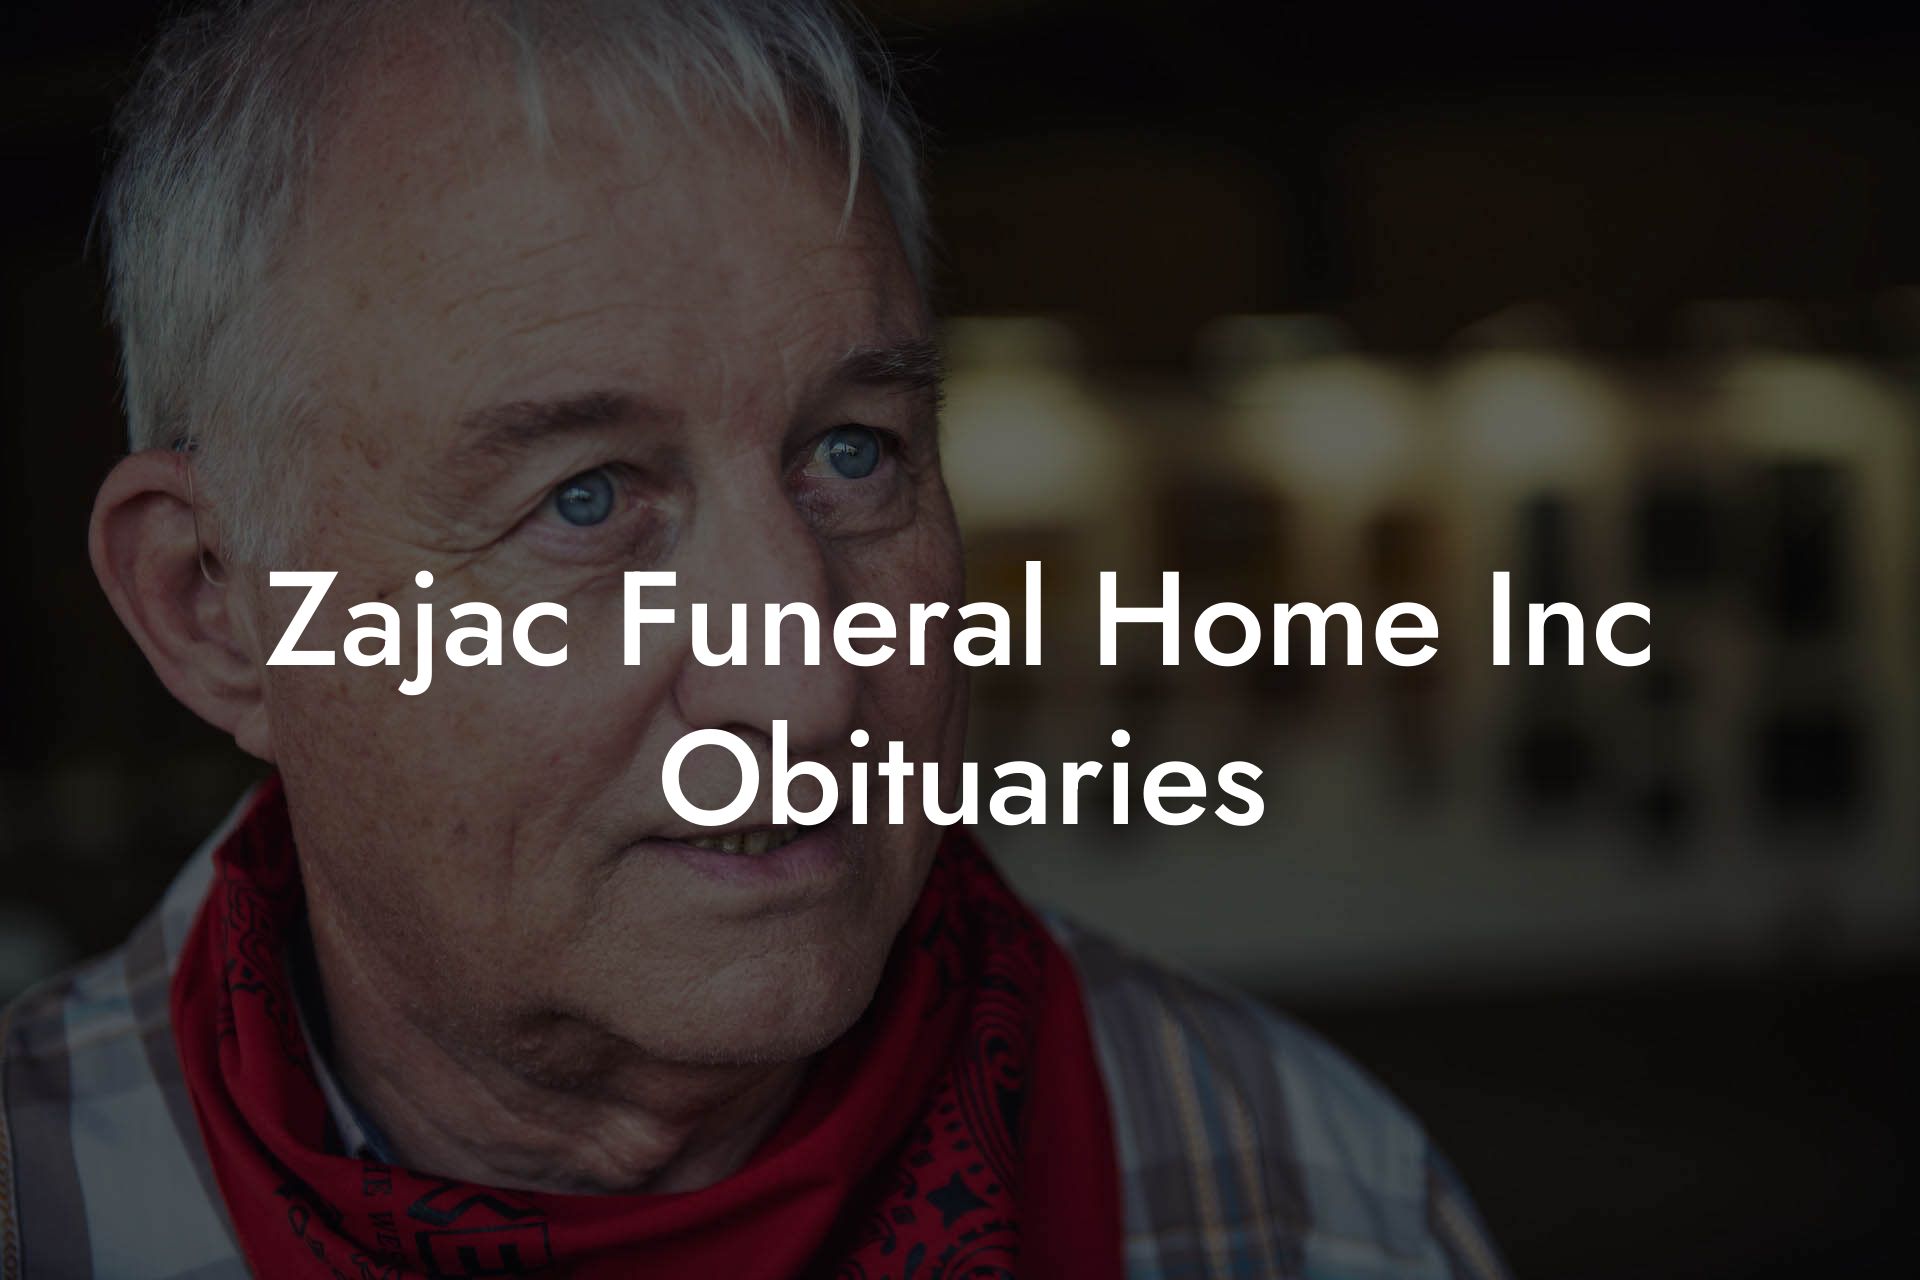 Zajac Funeral Home Inc. Obituaries